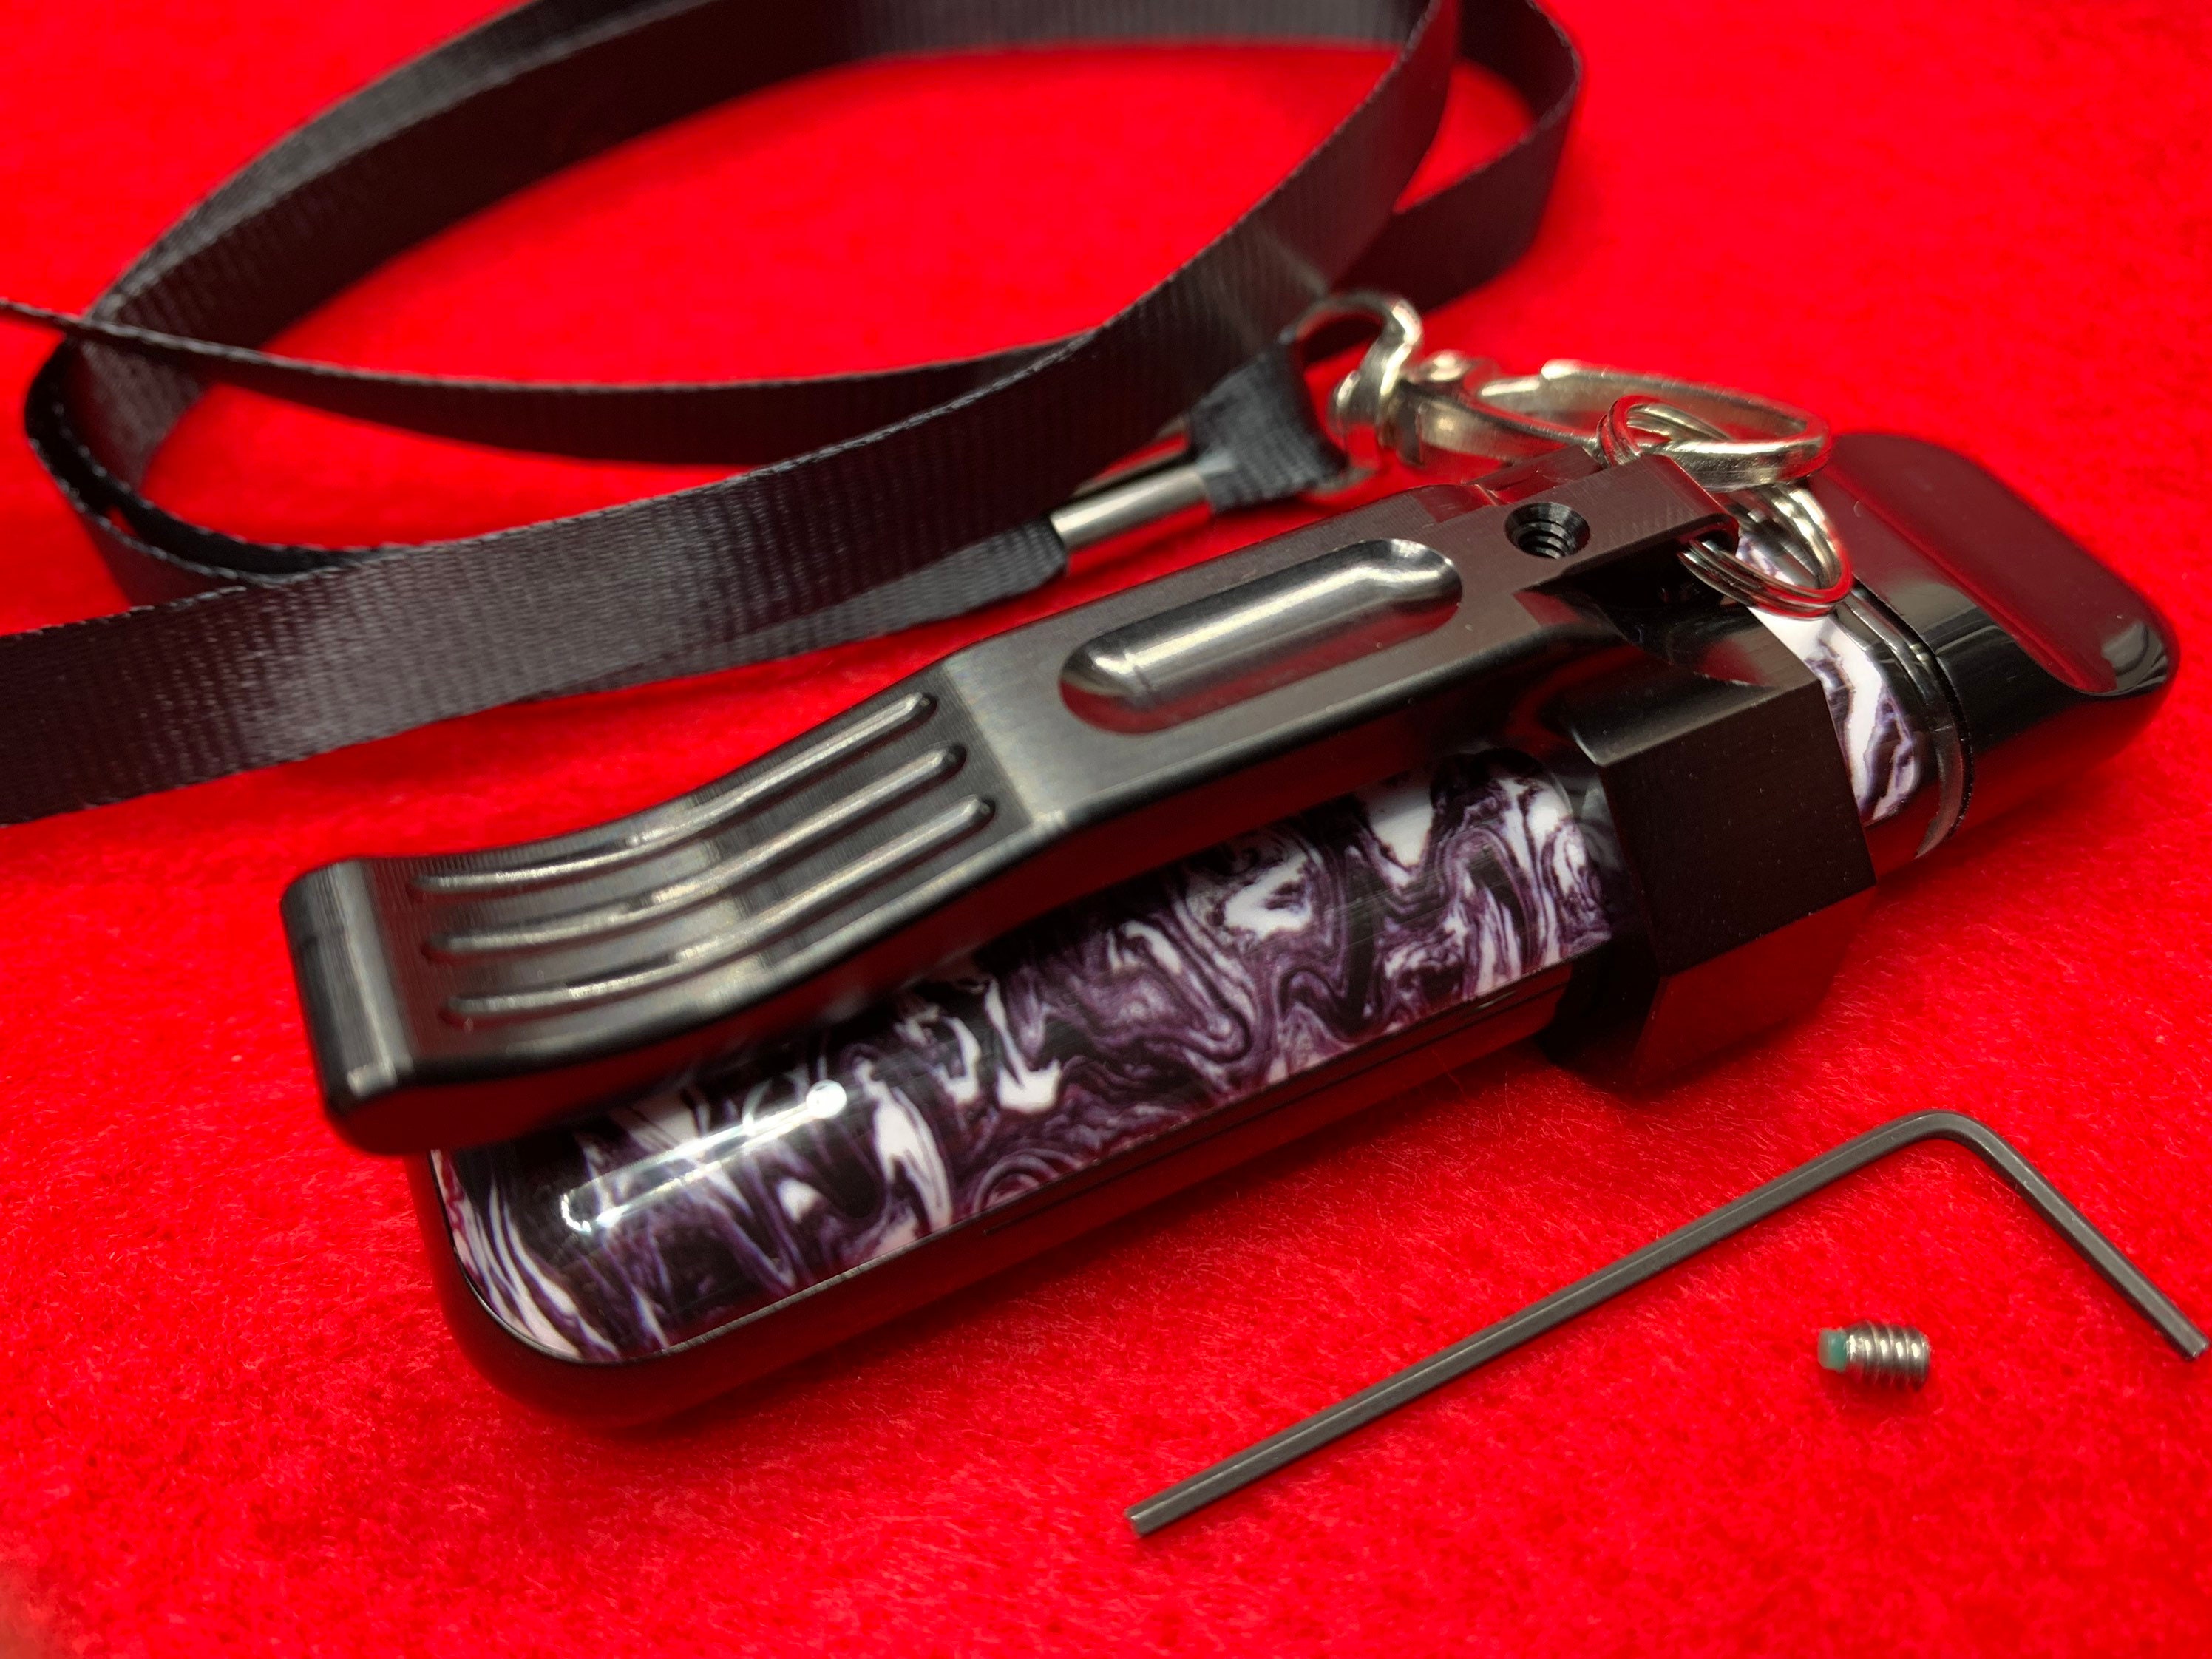  USA Gear Vape Pen Travel Case Belt Bag with Belt Loop &  Carabiner Clip - Elastic Neoprene Vaporizer Pen Carry Case, Travel Pouch  Fits E Juice, Mod Tanks, Vape Cart Battery